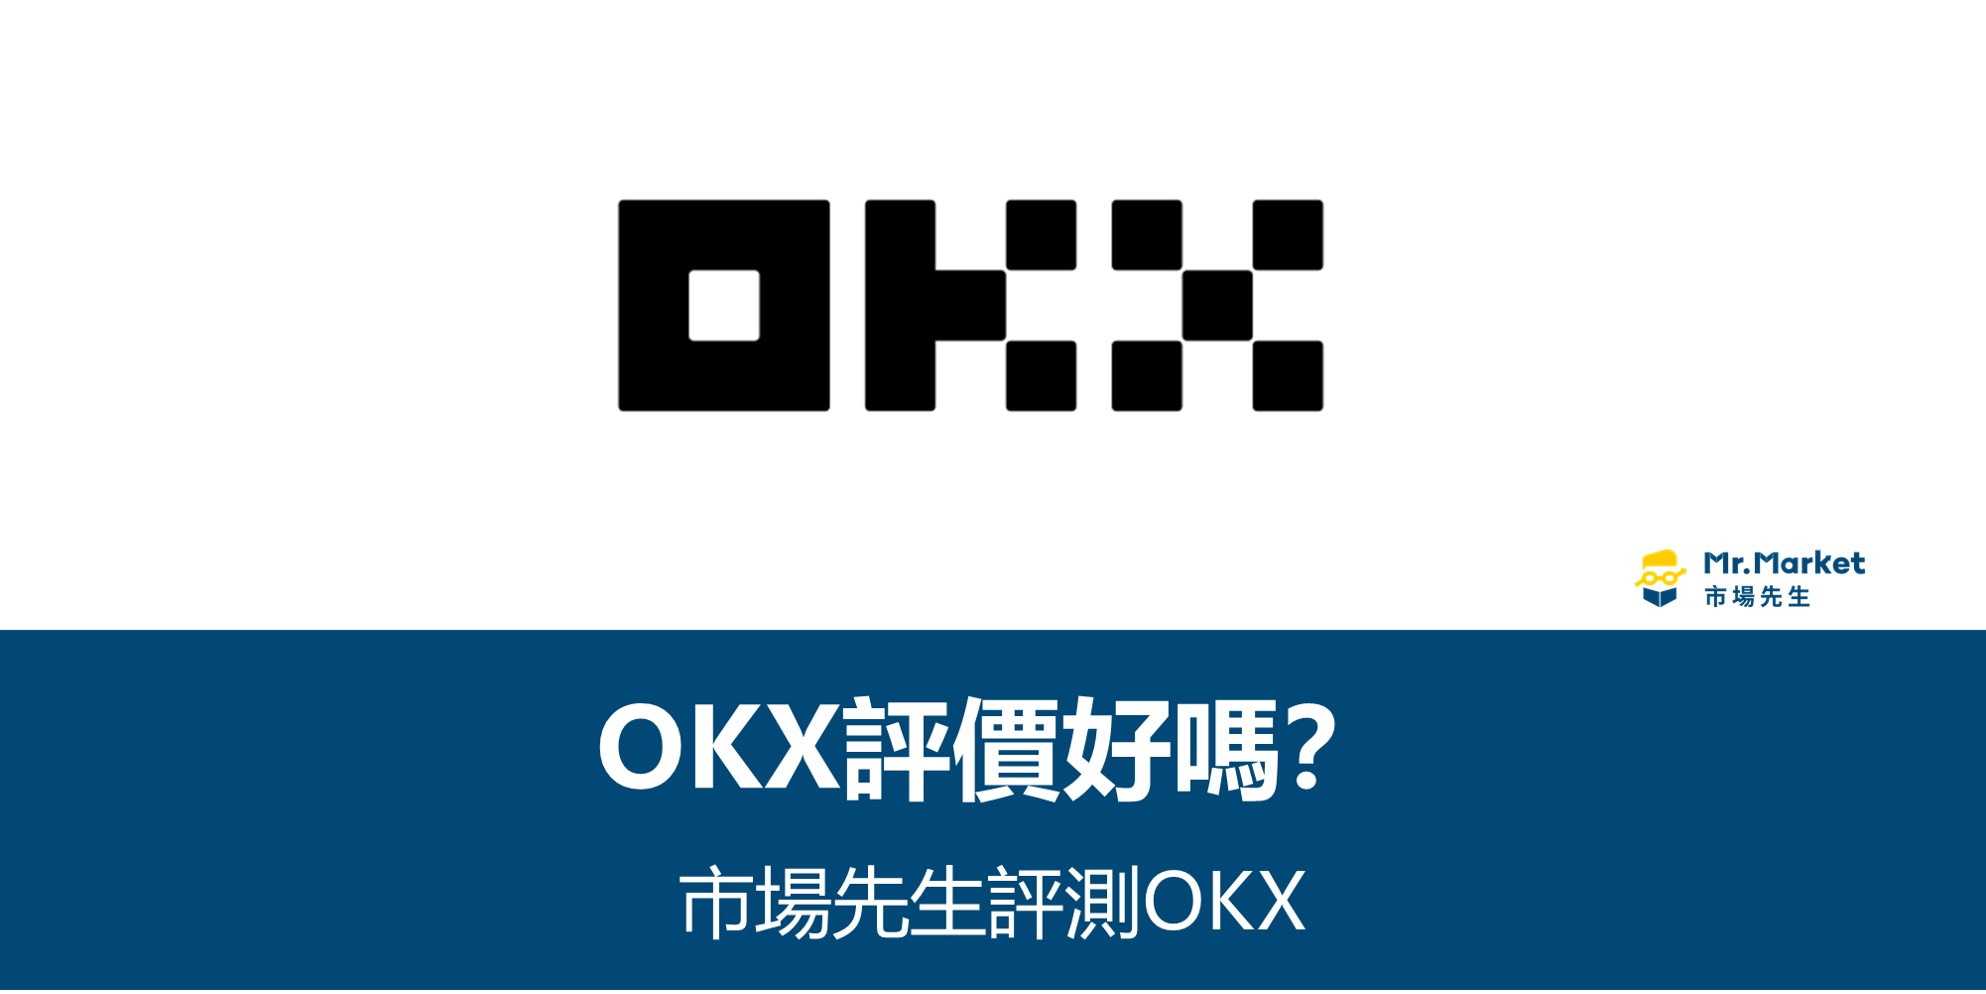 OKX評價好嗎？市場先生評測OKX